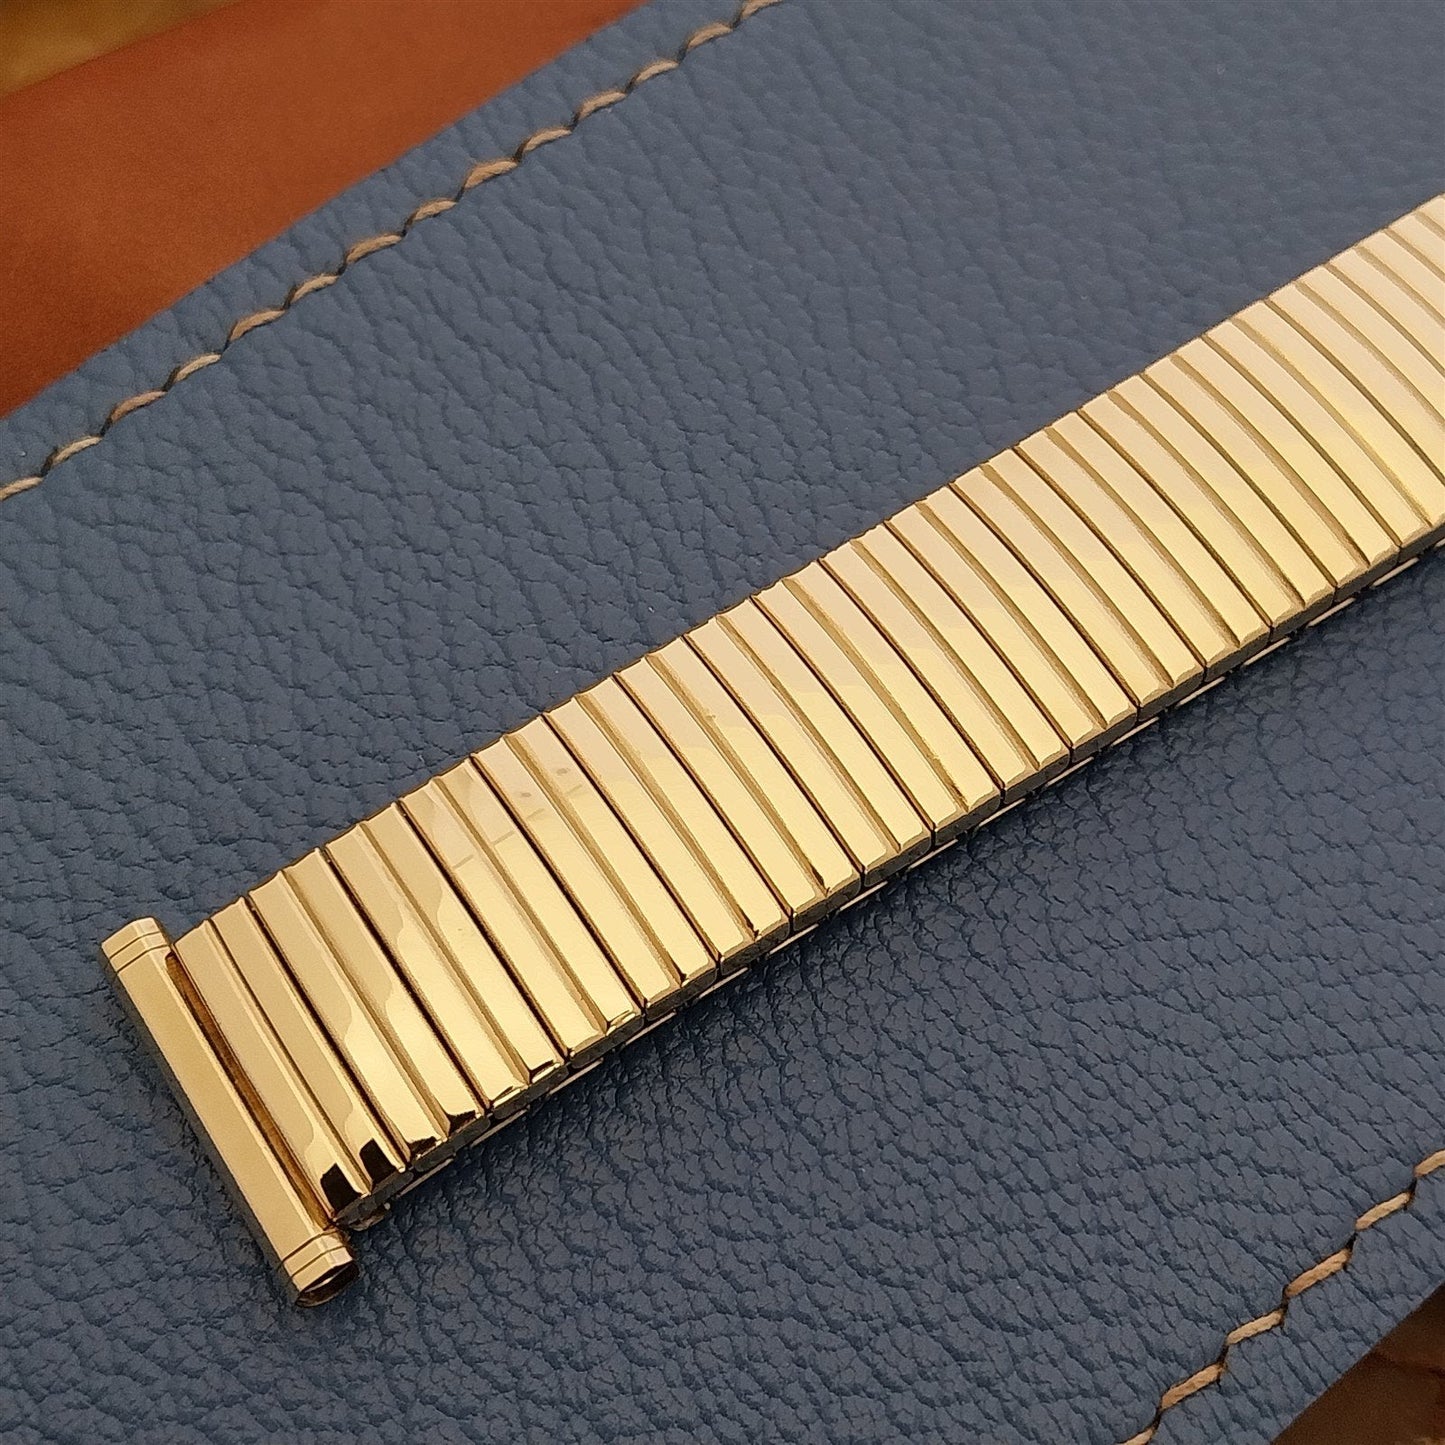 19mm 18mm 16mm 10K Gold Filled 1965 Speidel Linesman Unused Vintage Watch Band